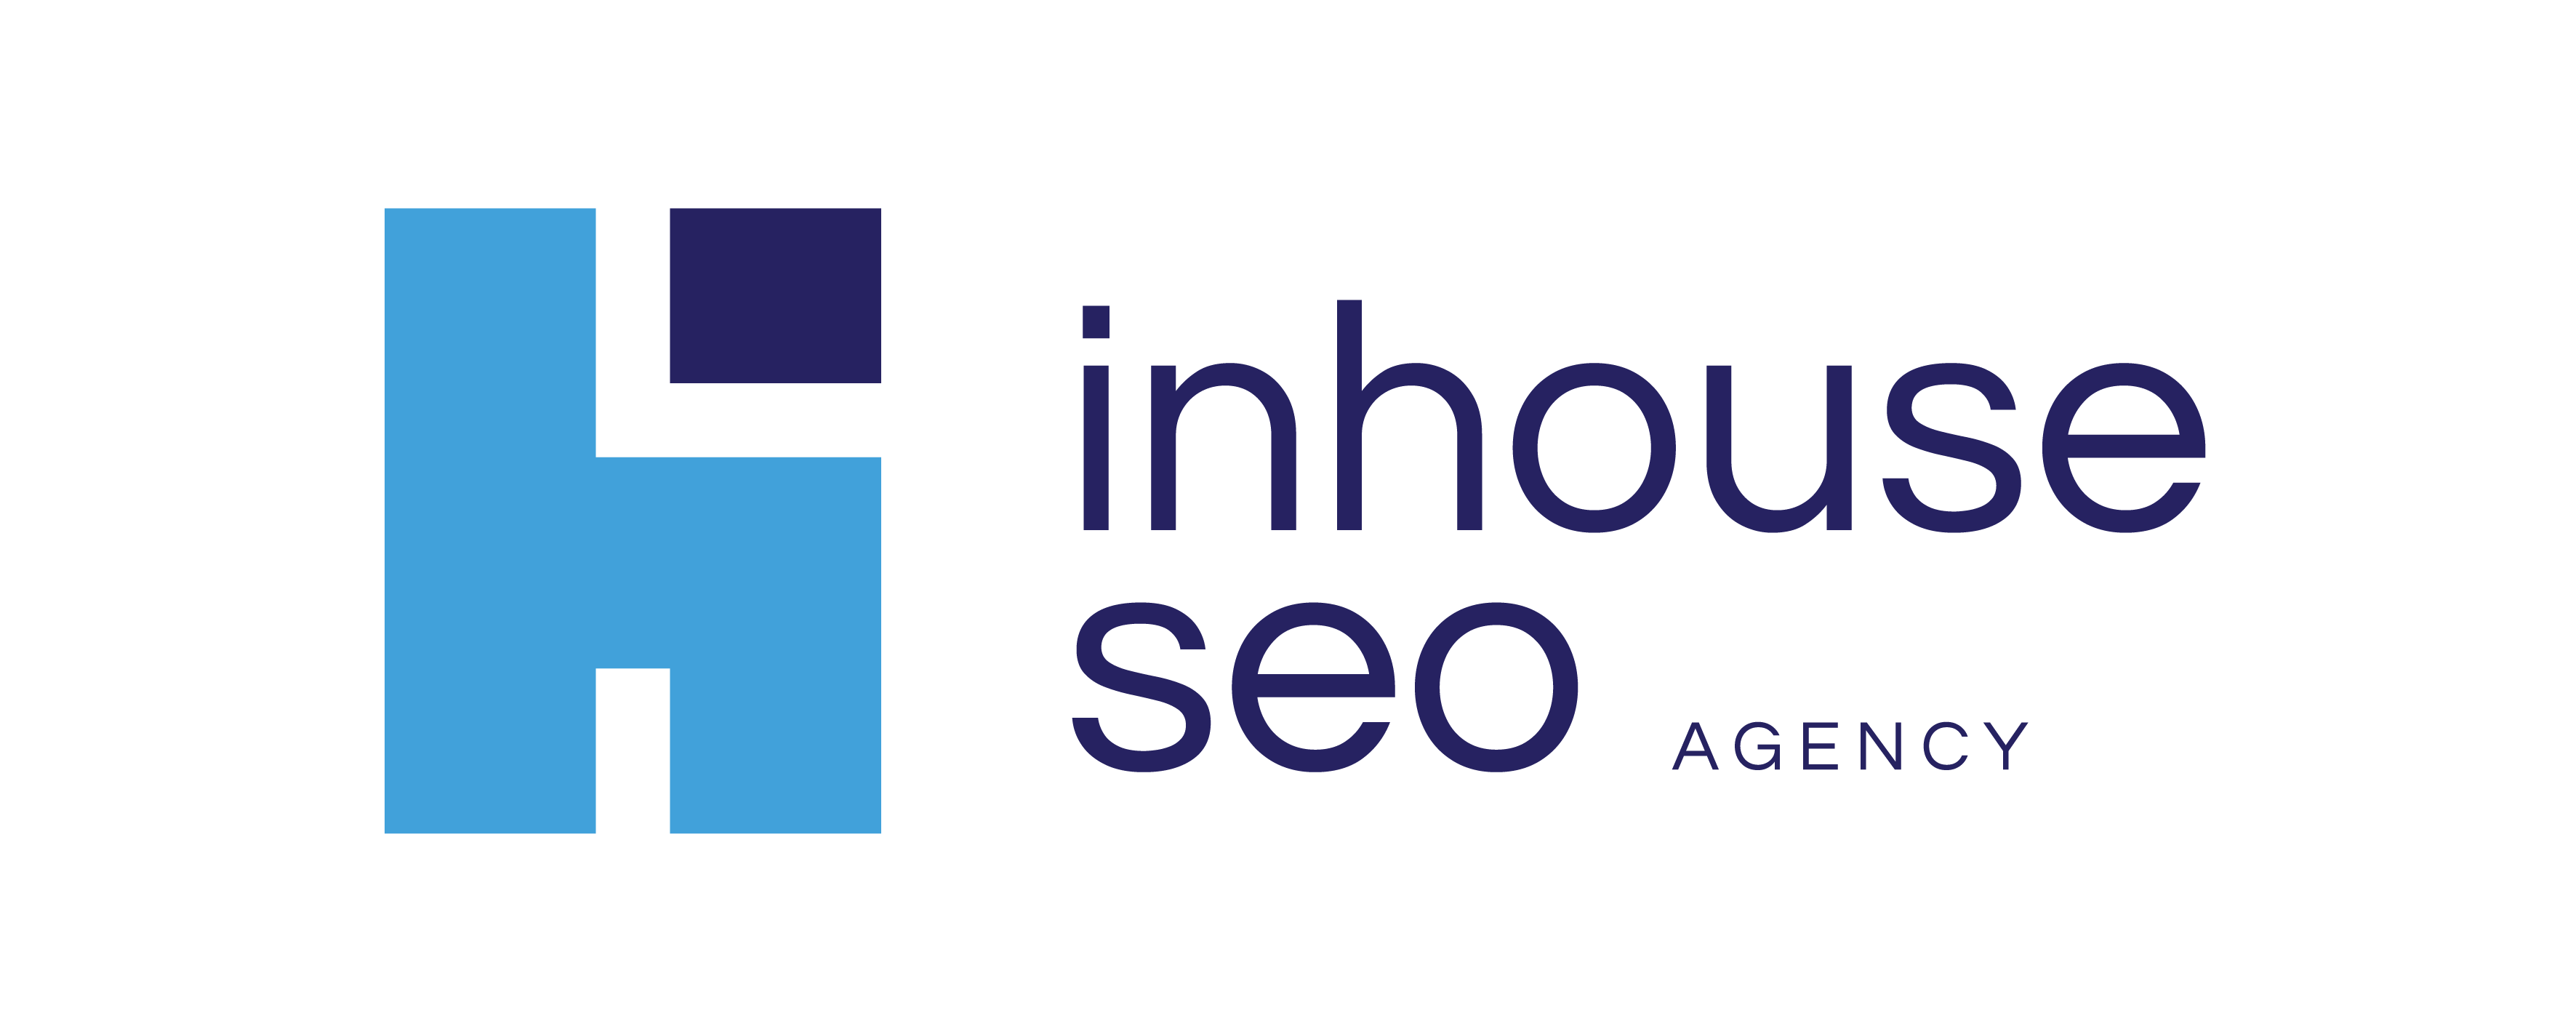 Inhouse SEO agency